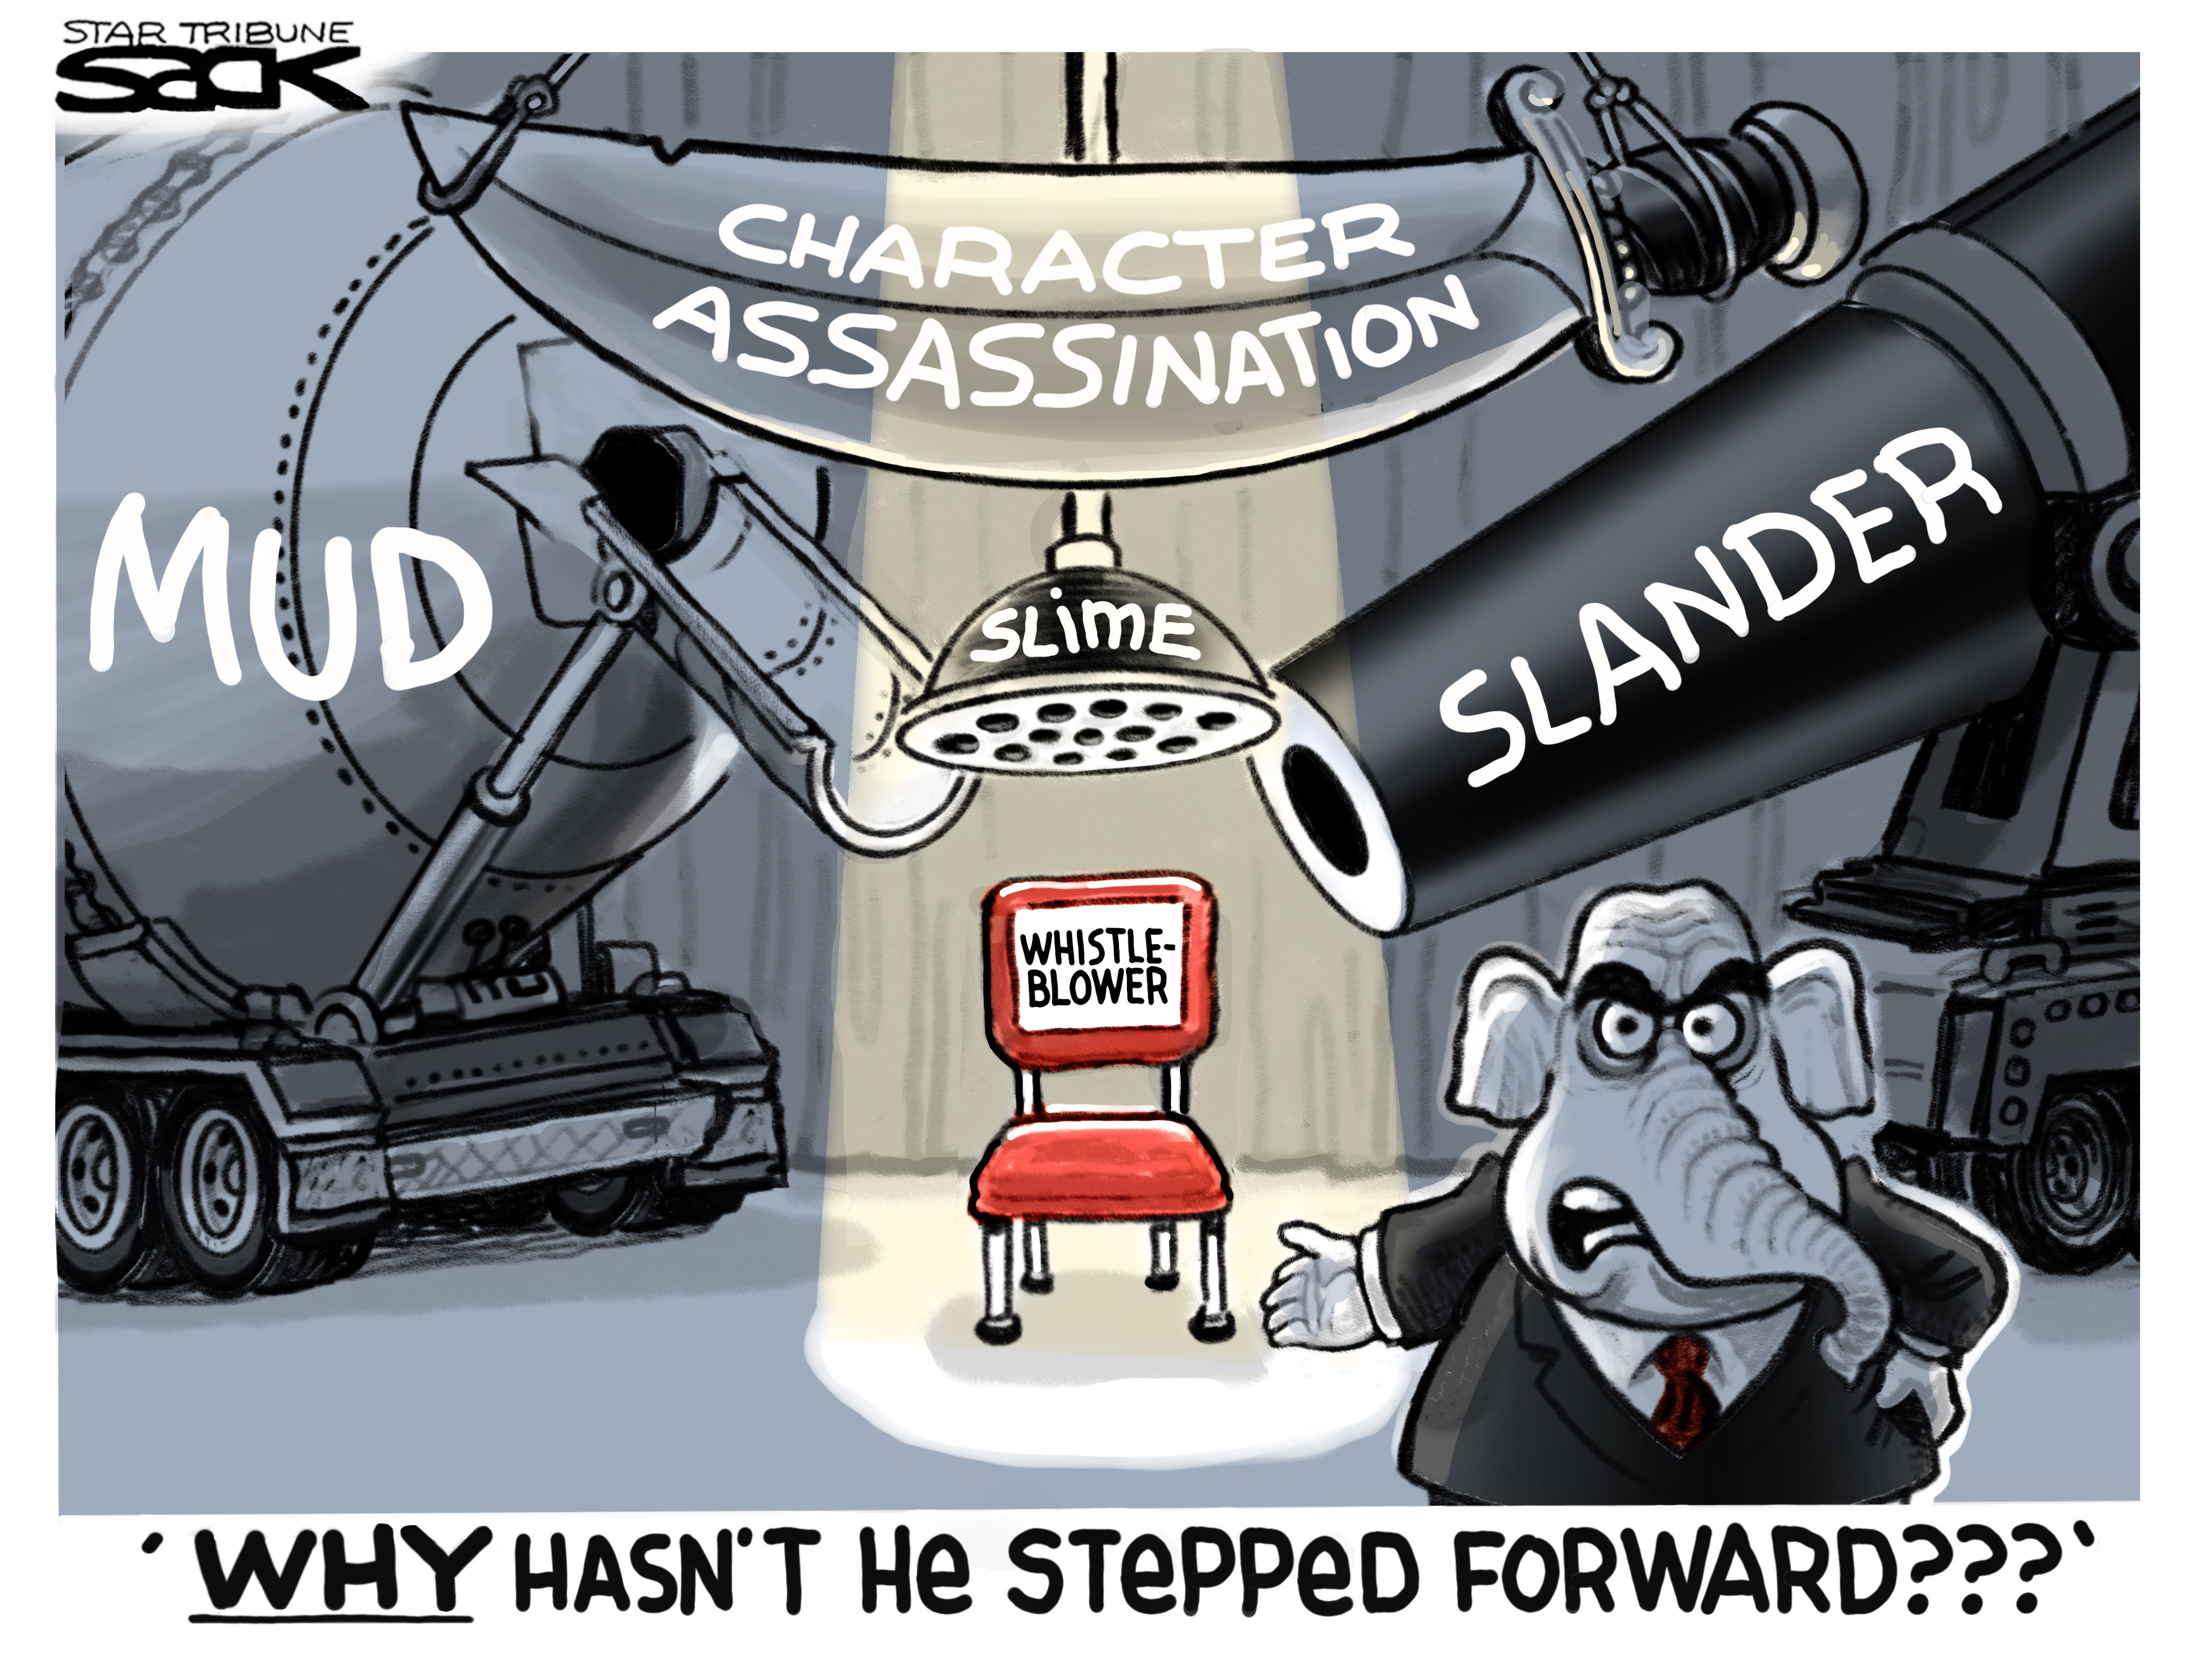 Political Cartoon U.S. Trump GOP Whistleblower Character Assassination